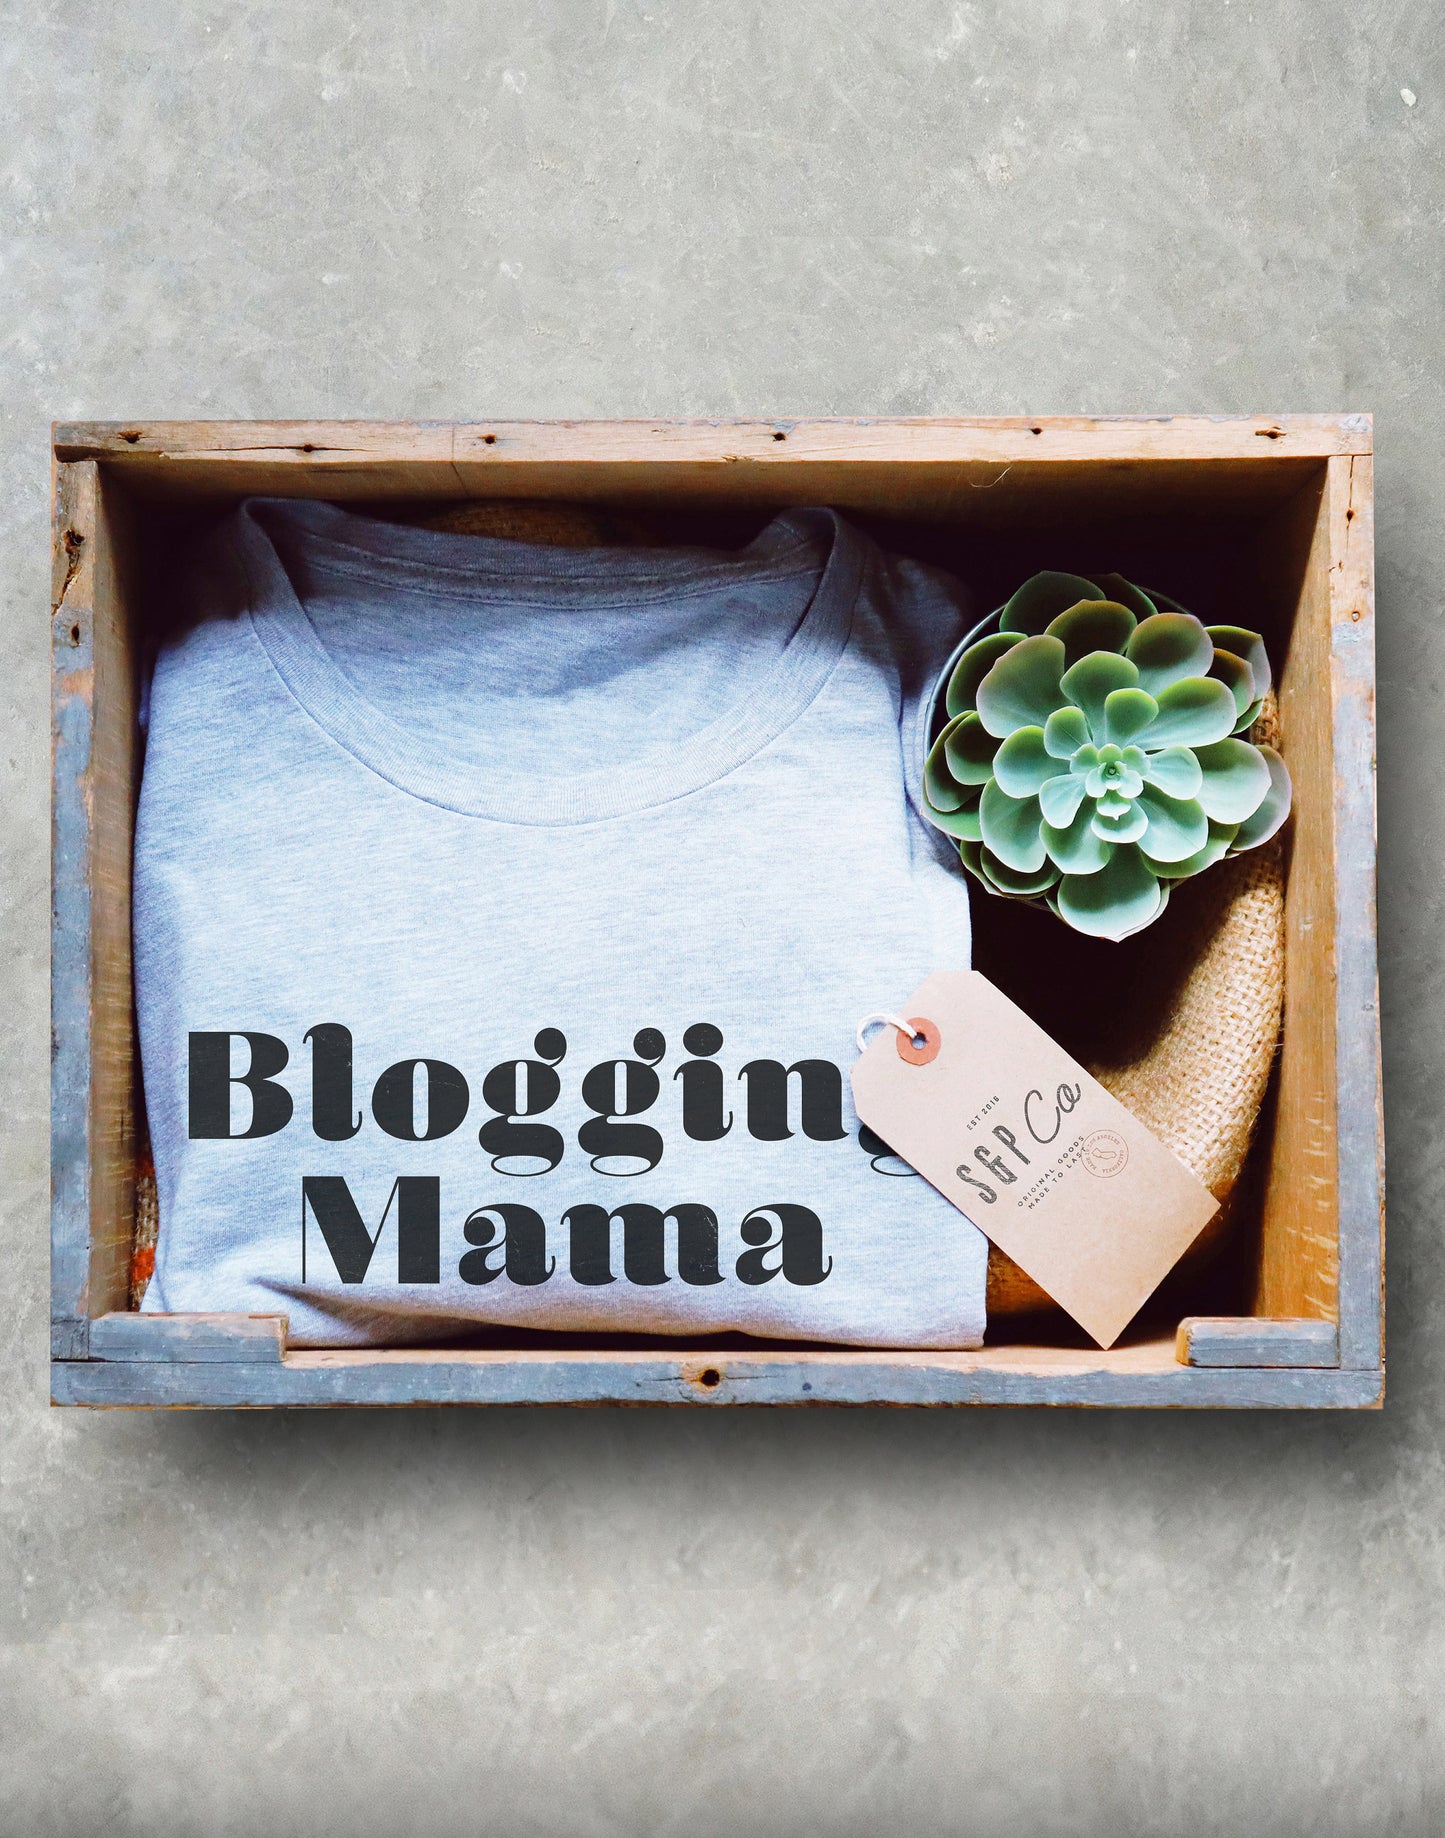 Blogging Mama Unisex Shirt - Blogger Shirt, Blogger Gift, Blogging Shirt Fashion Blogger, Travel Blogger, Beauty Blogger